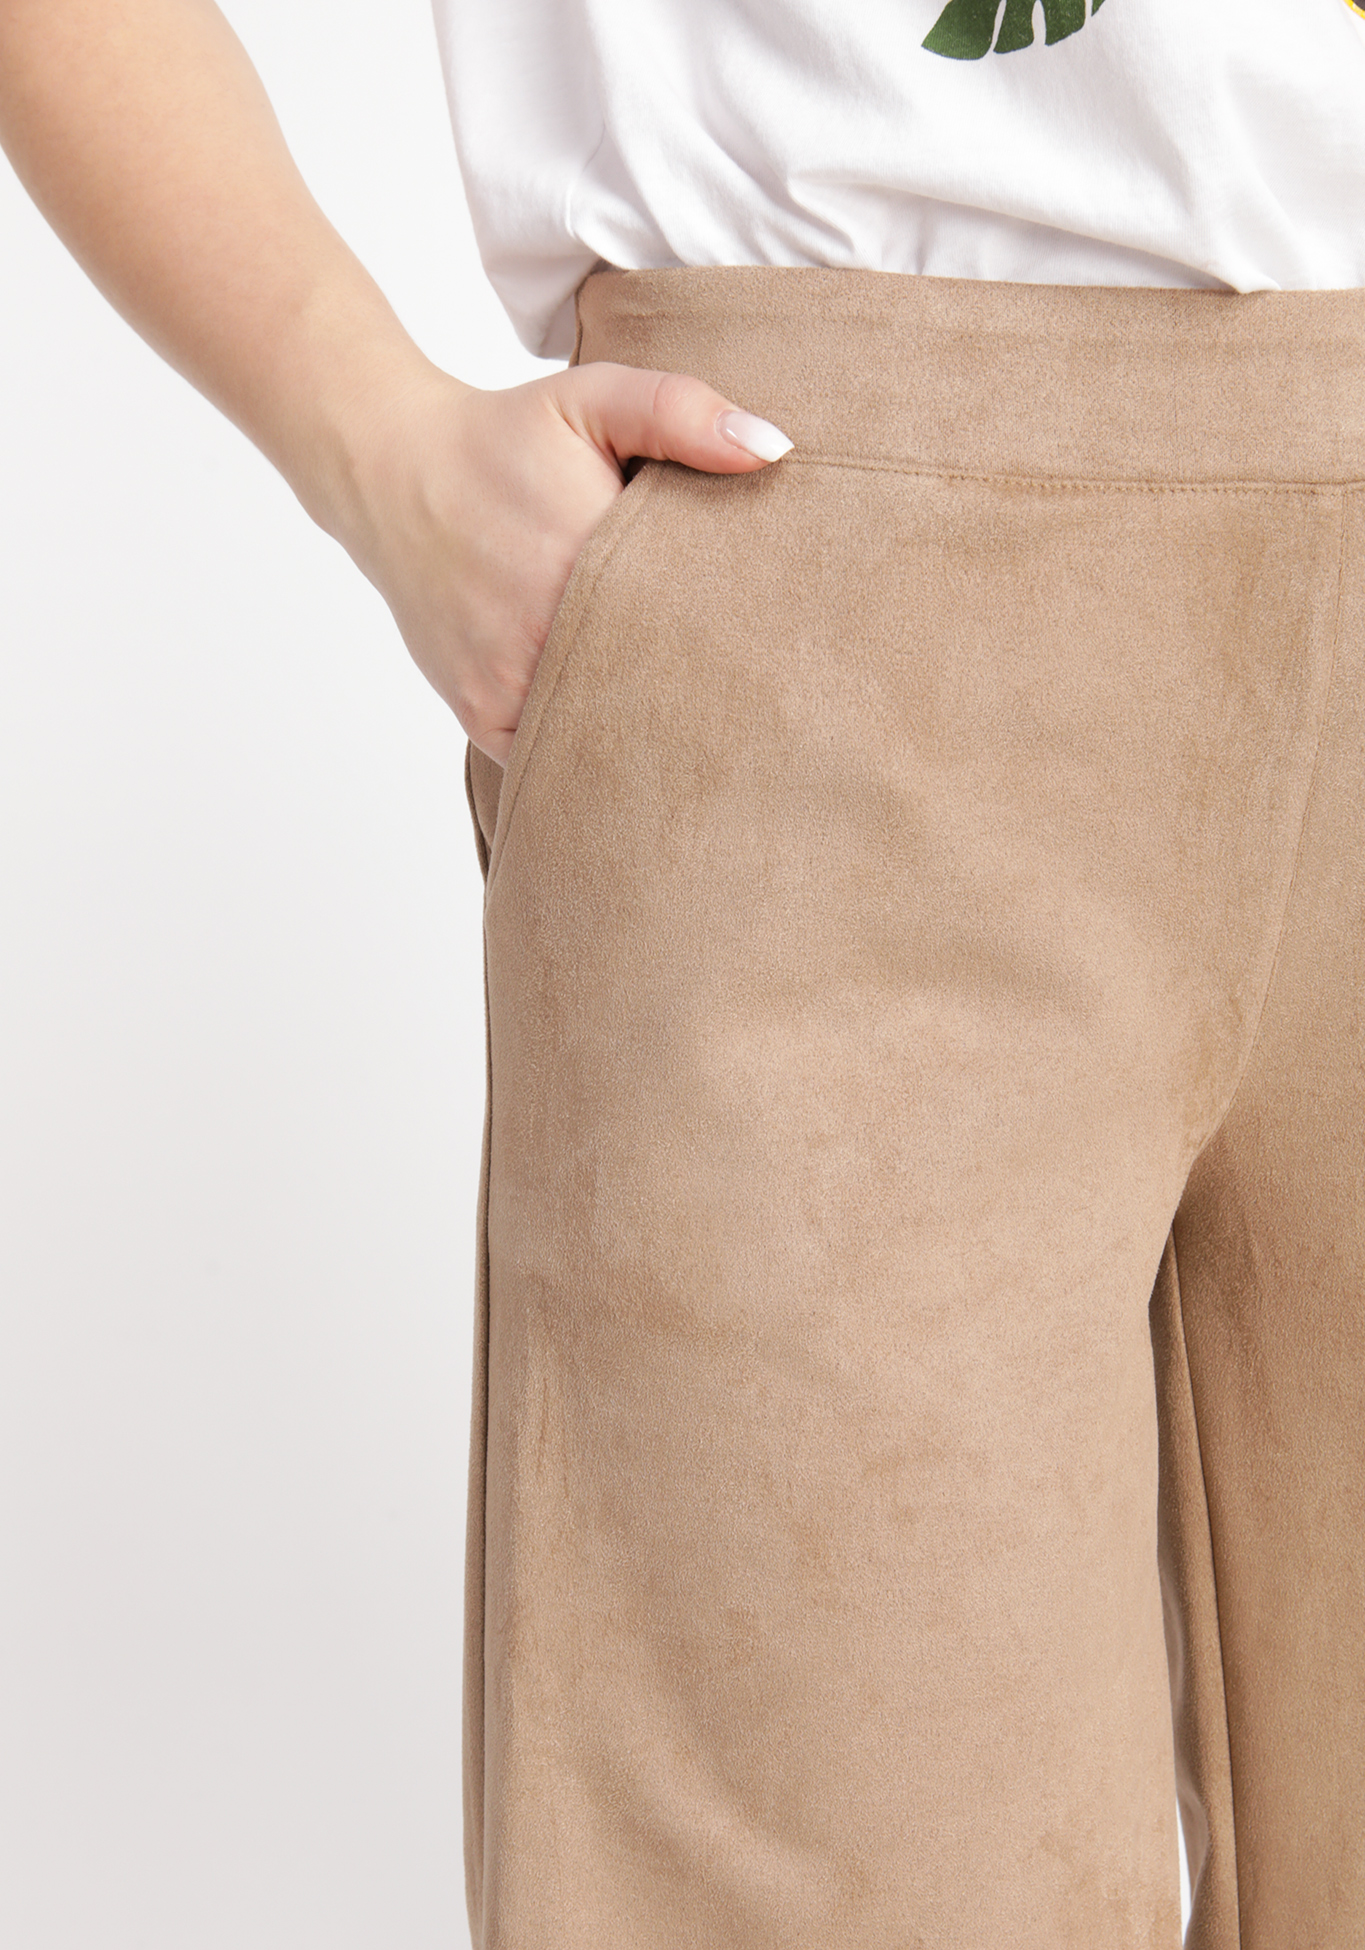 Шорты женские ниже колена из эко-замши Star Fashion, размер 50, цвет бежевый - фото 4